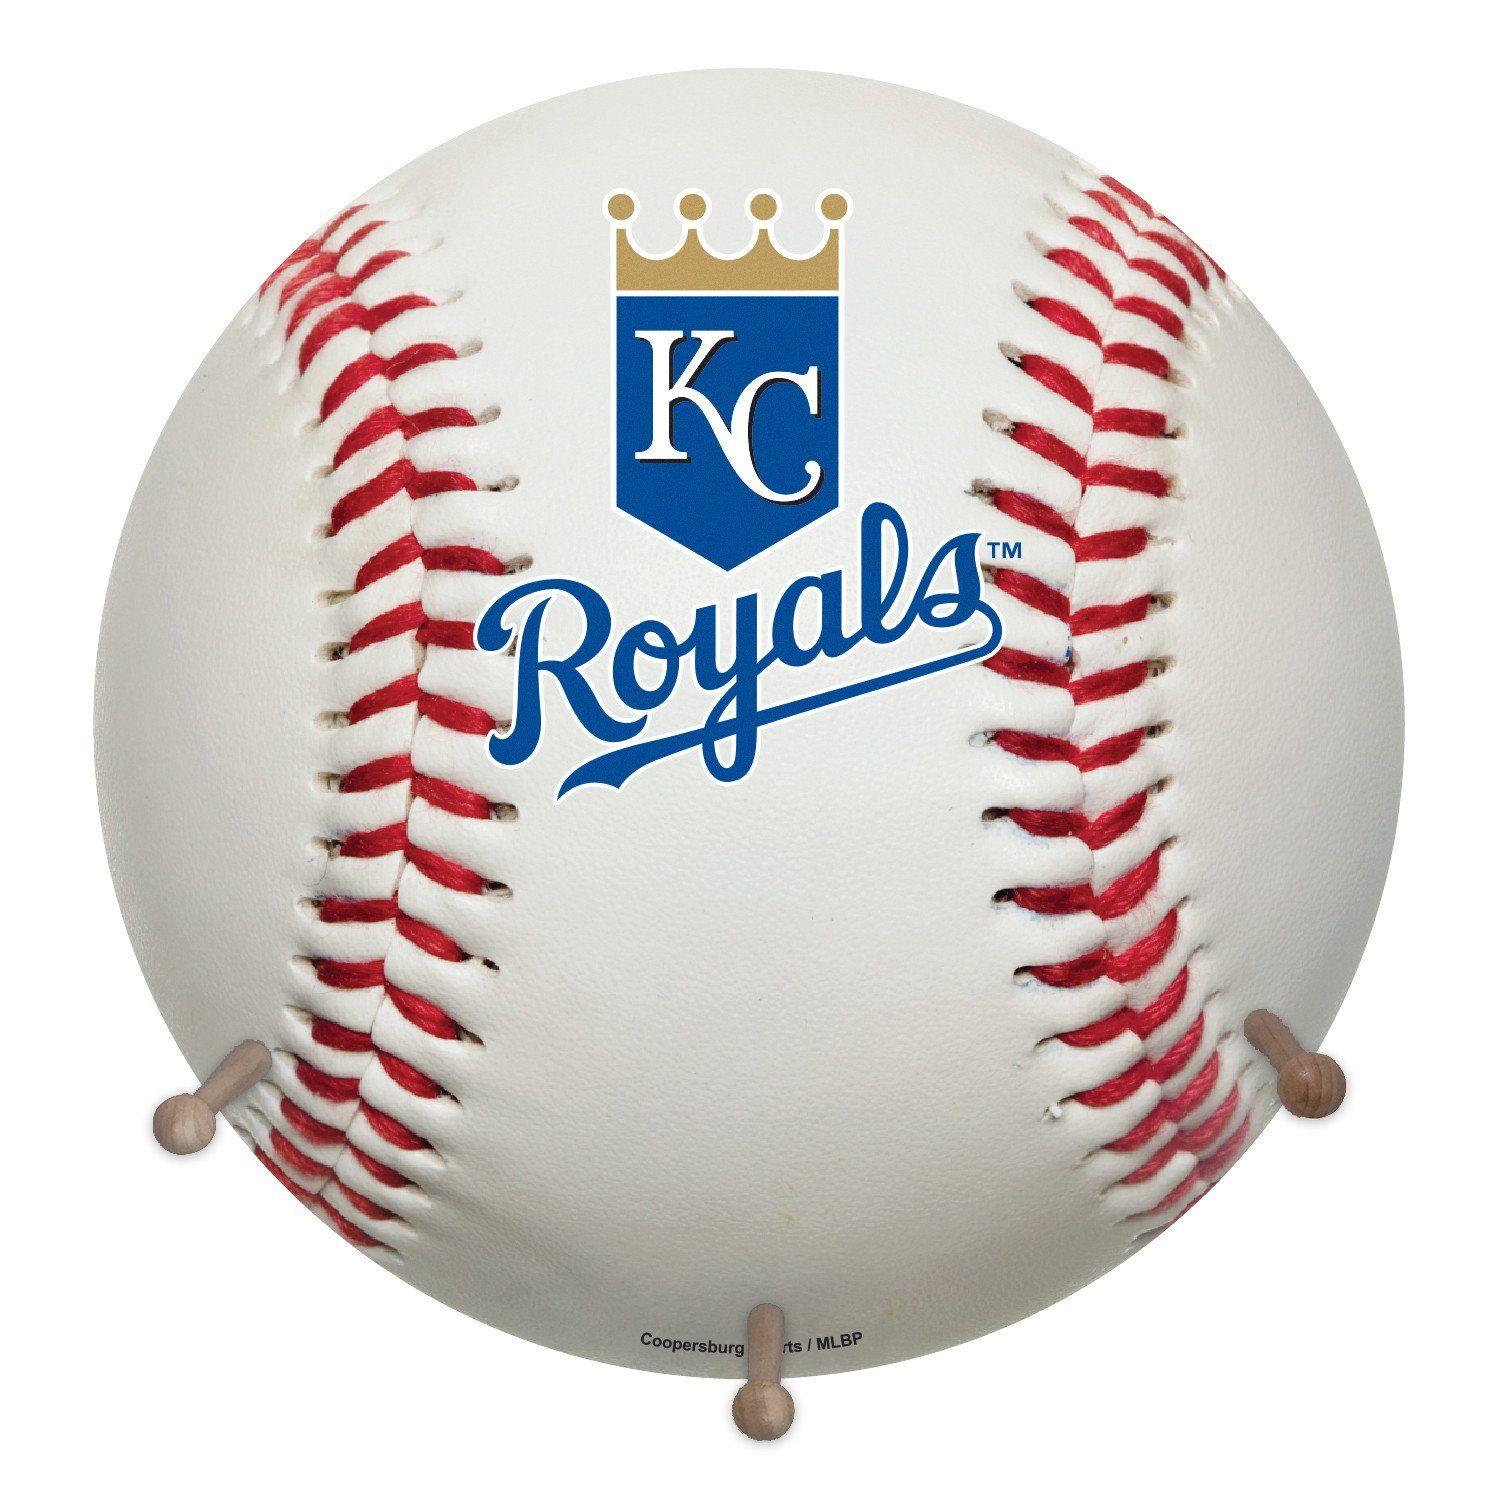 Royals Baseball Logo - Kansas City Royals Baseball Coat Rack Team Logo | coopersburg